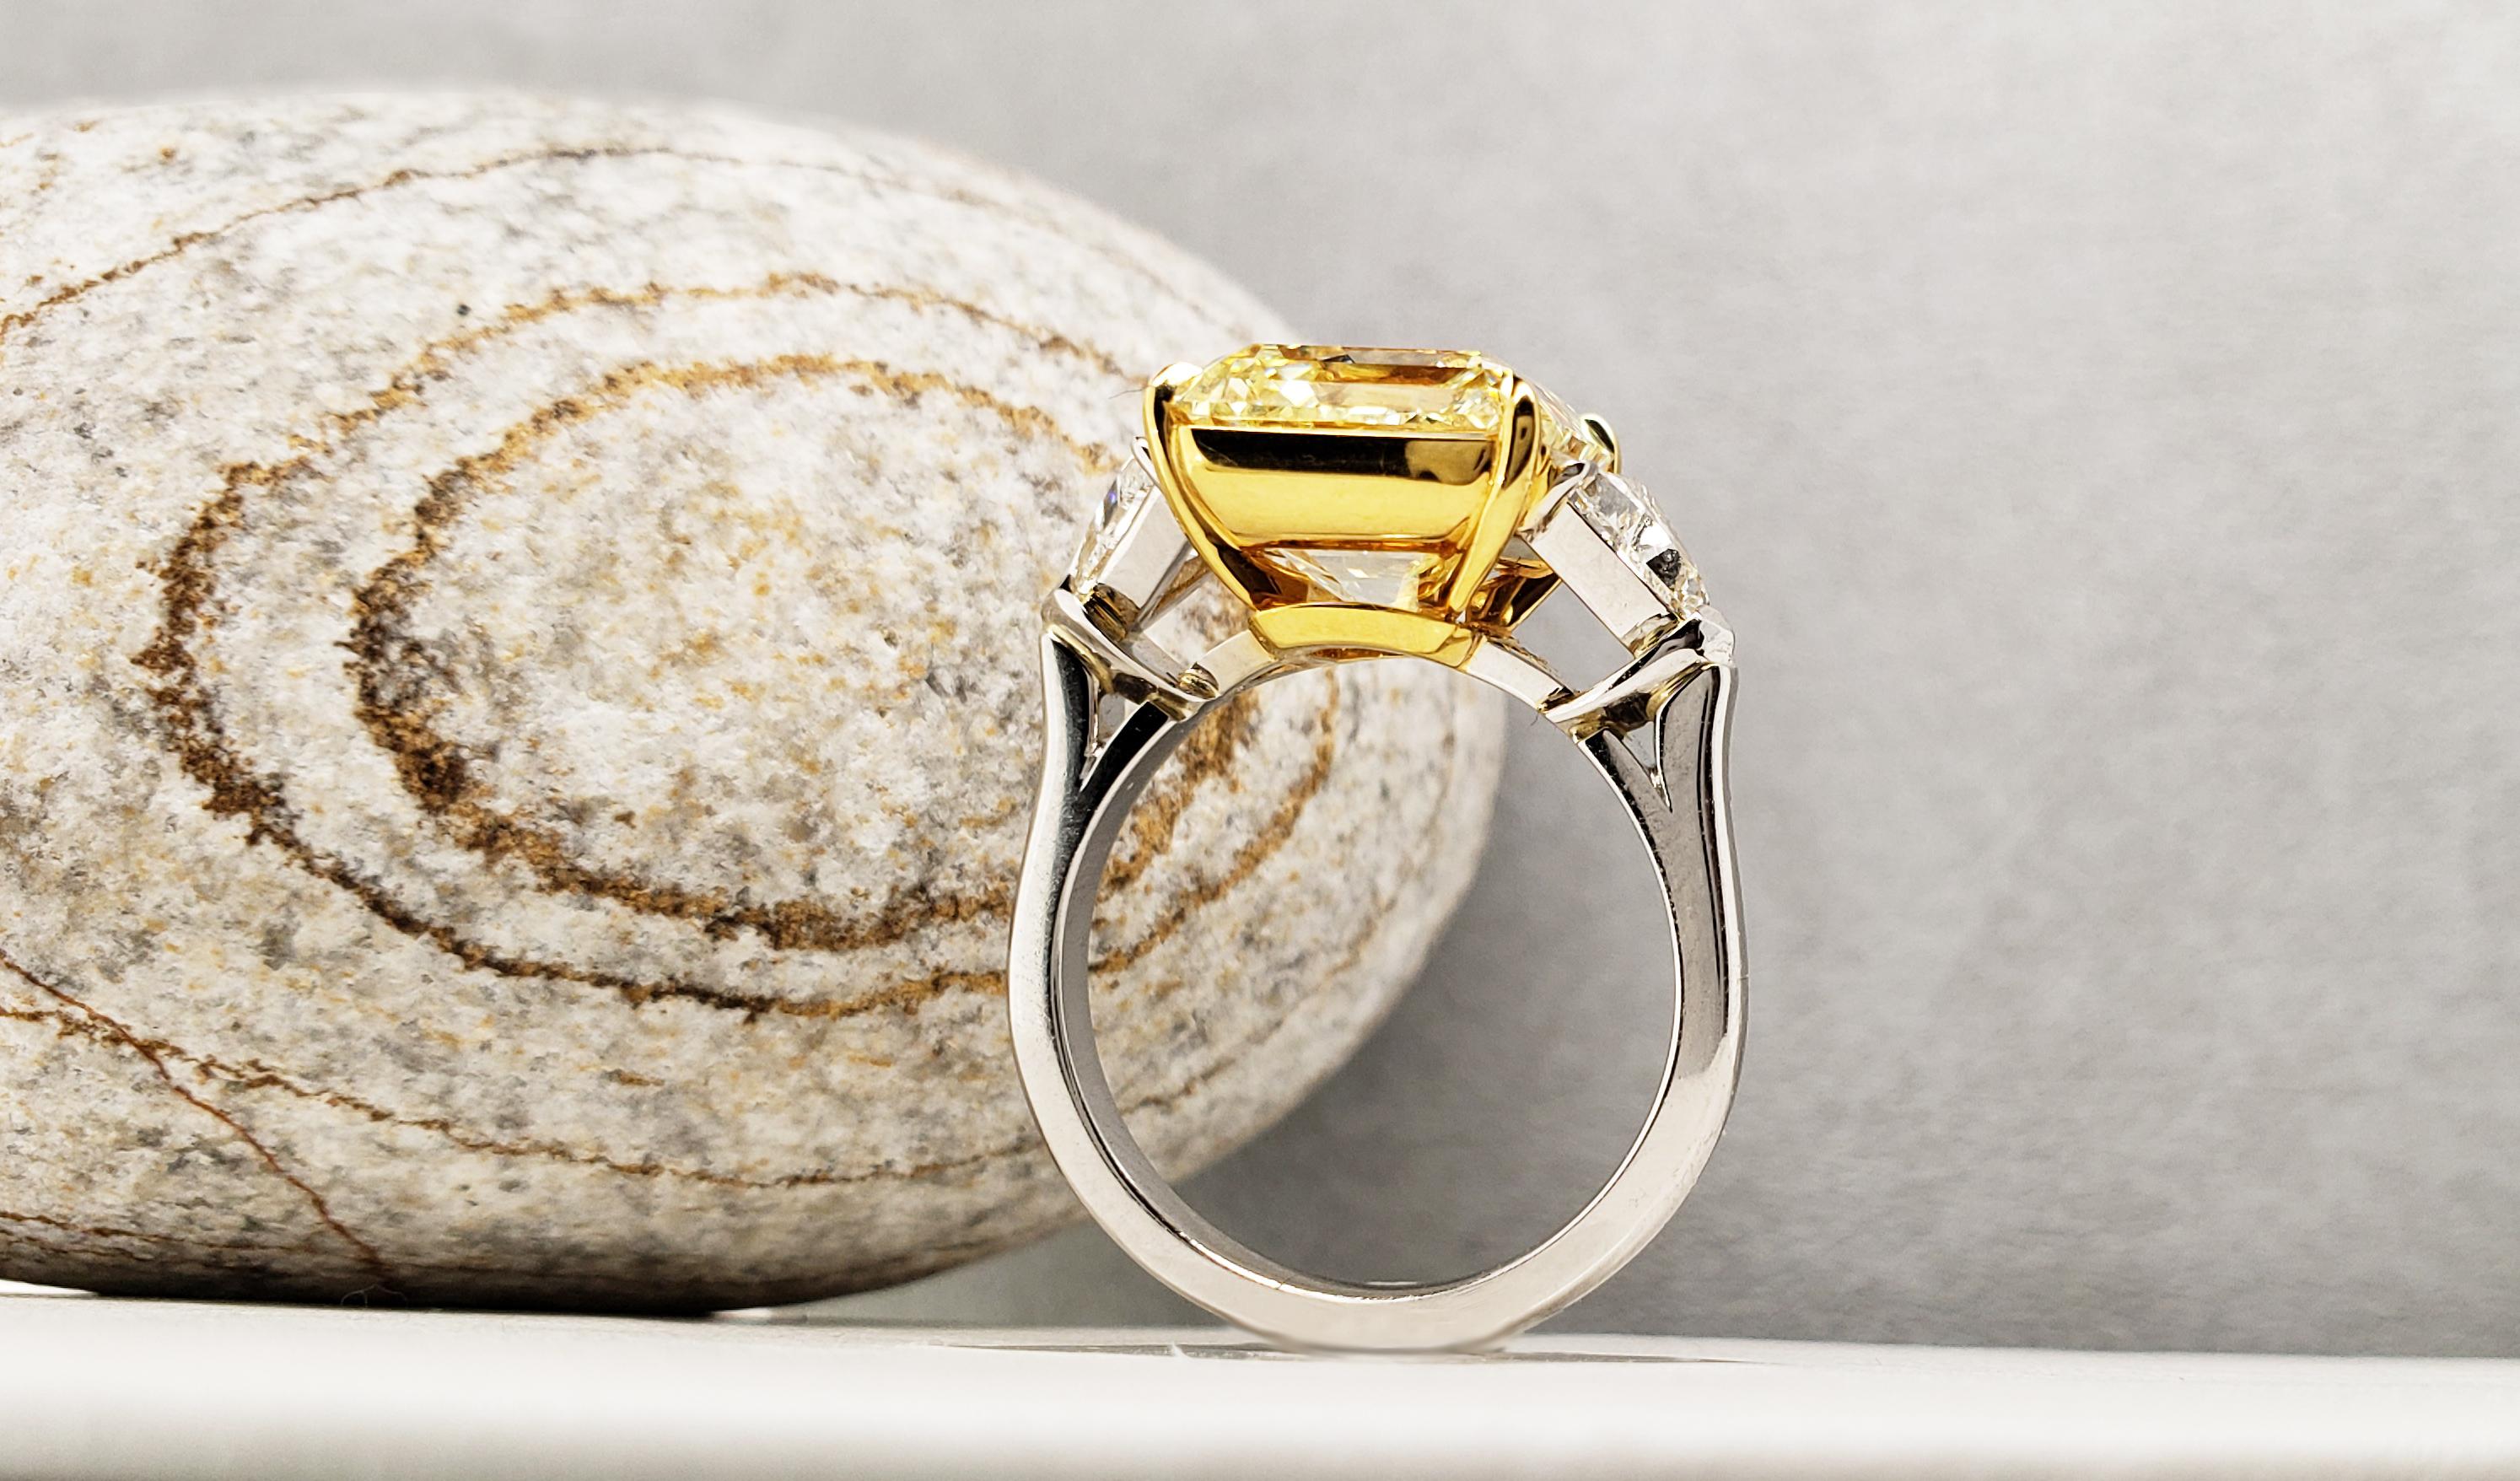 Emerald Cut Scarselli 7 Carat Fancy Yellow Diamond Ring in Platinum